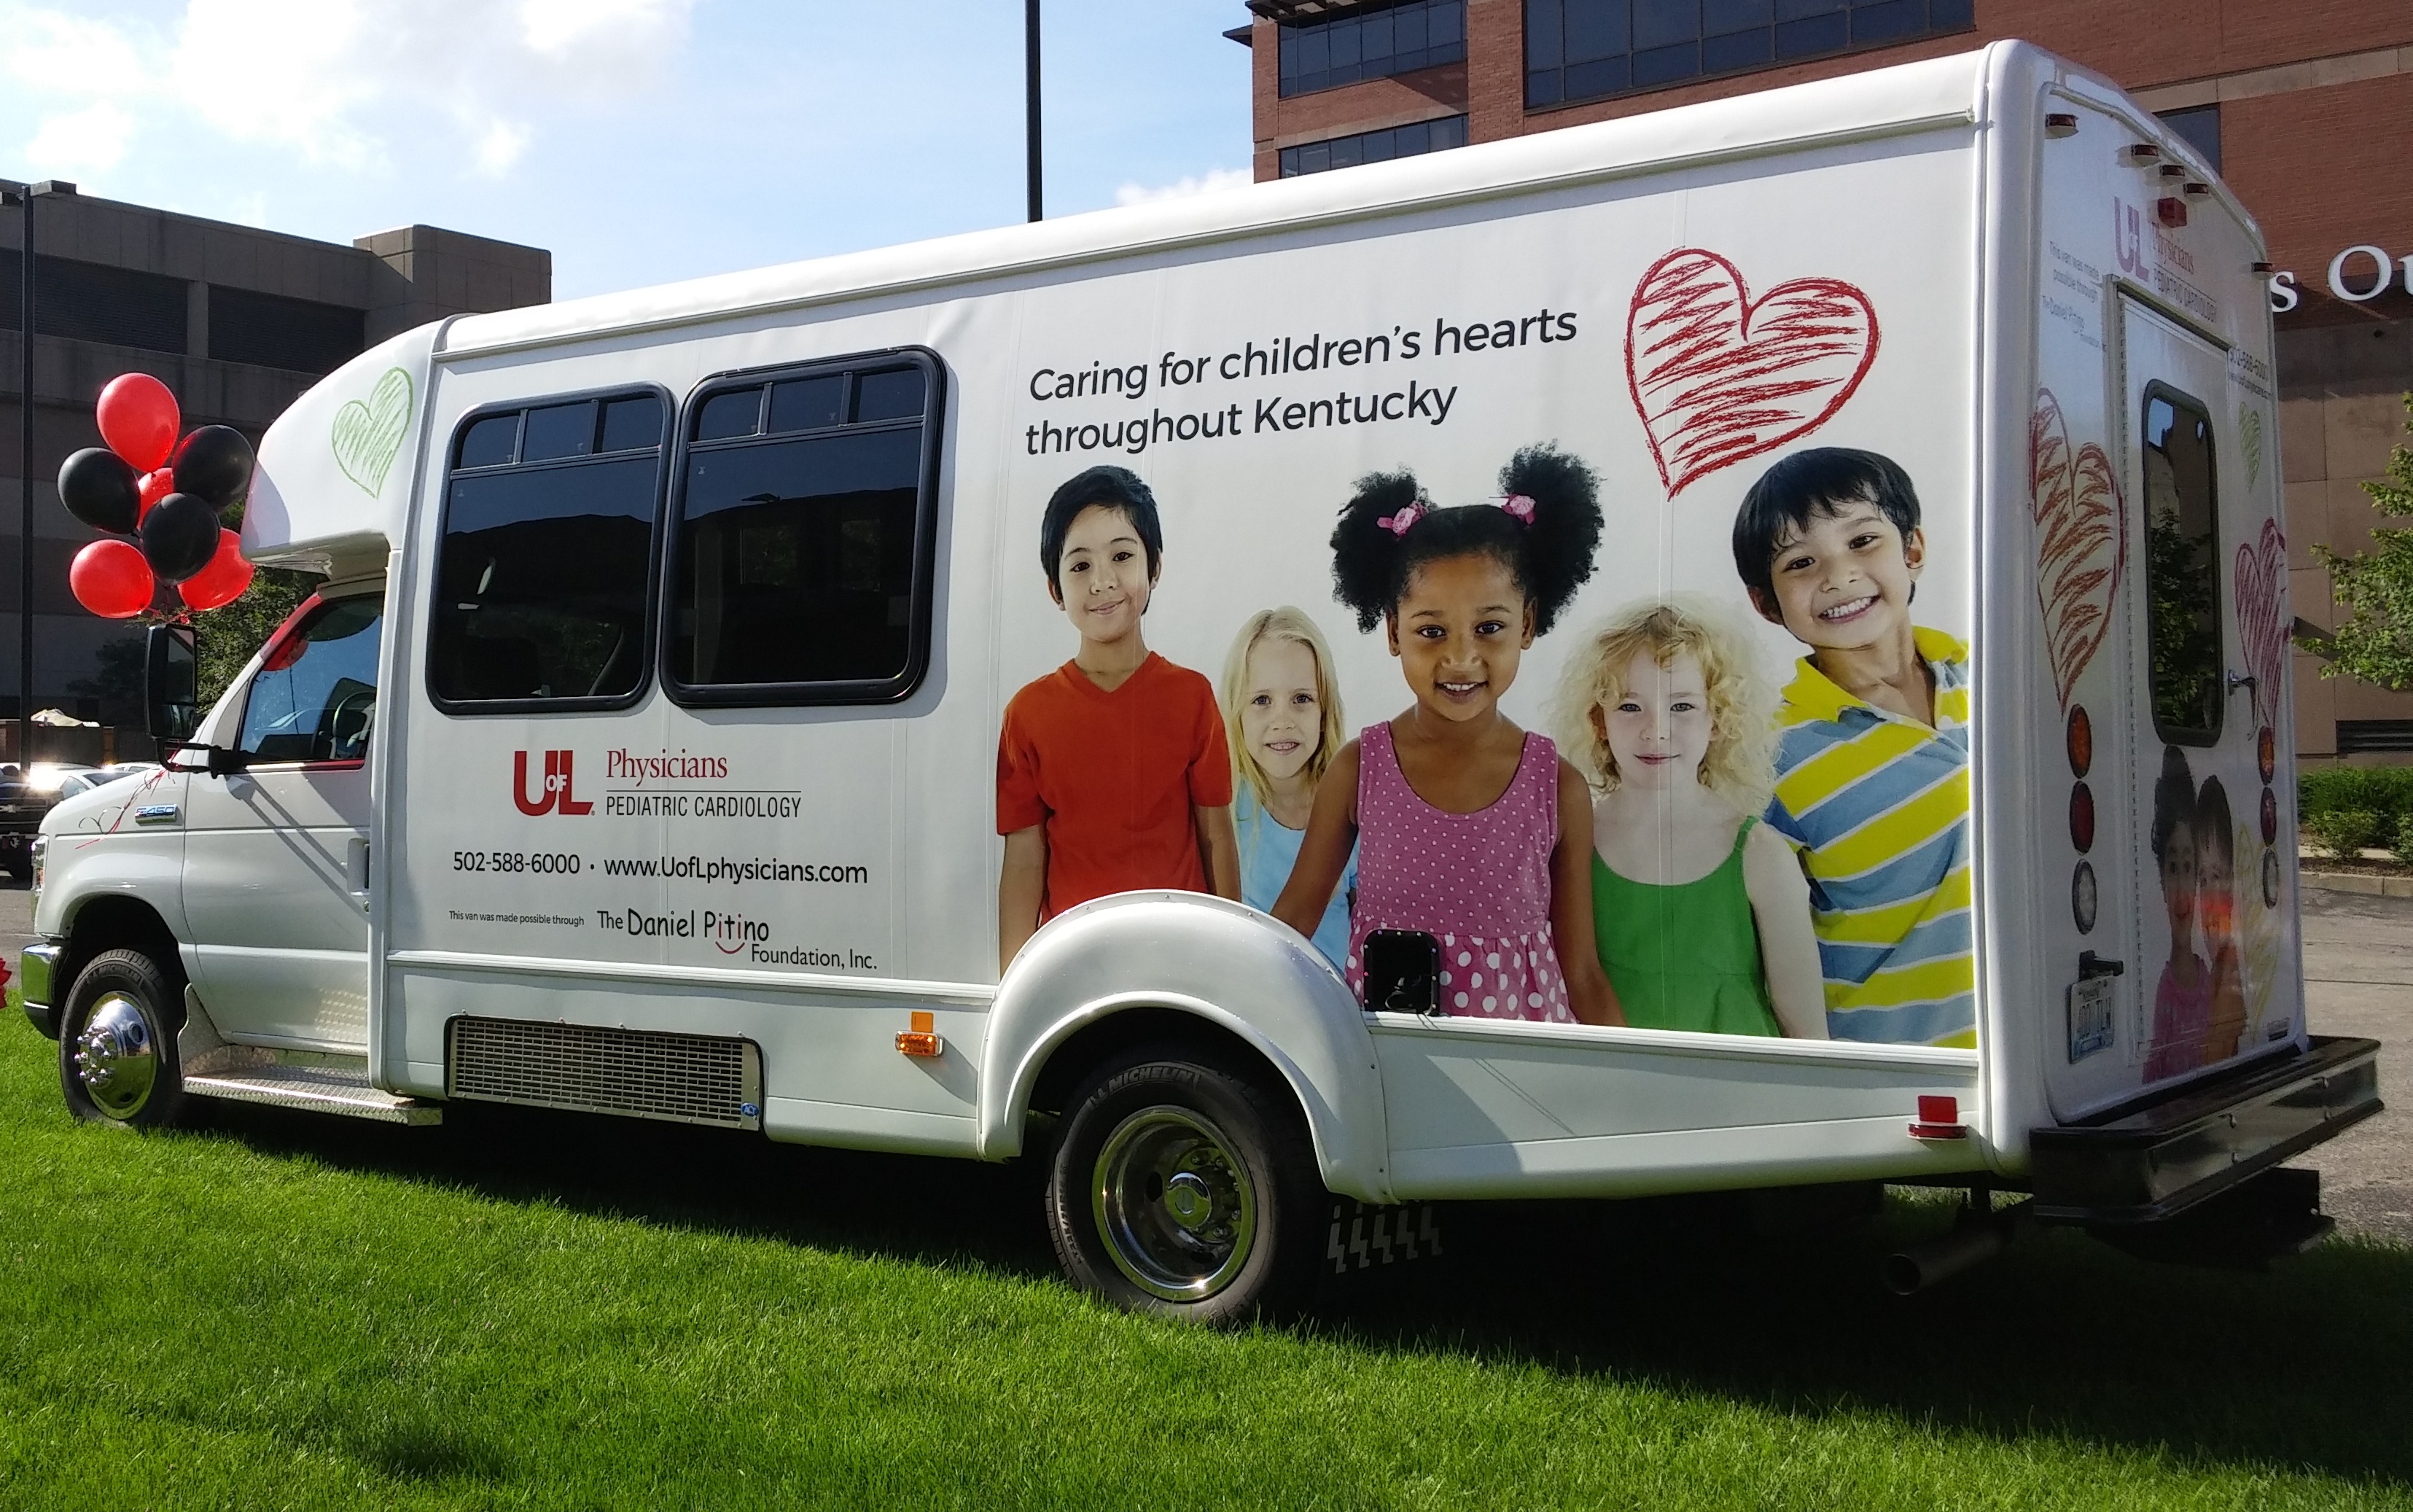 Daniel Pitino Foundation grant ensures 5,600 Kentucky children continue to receive cardiac care 